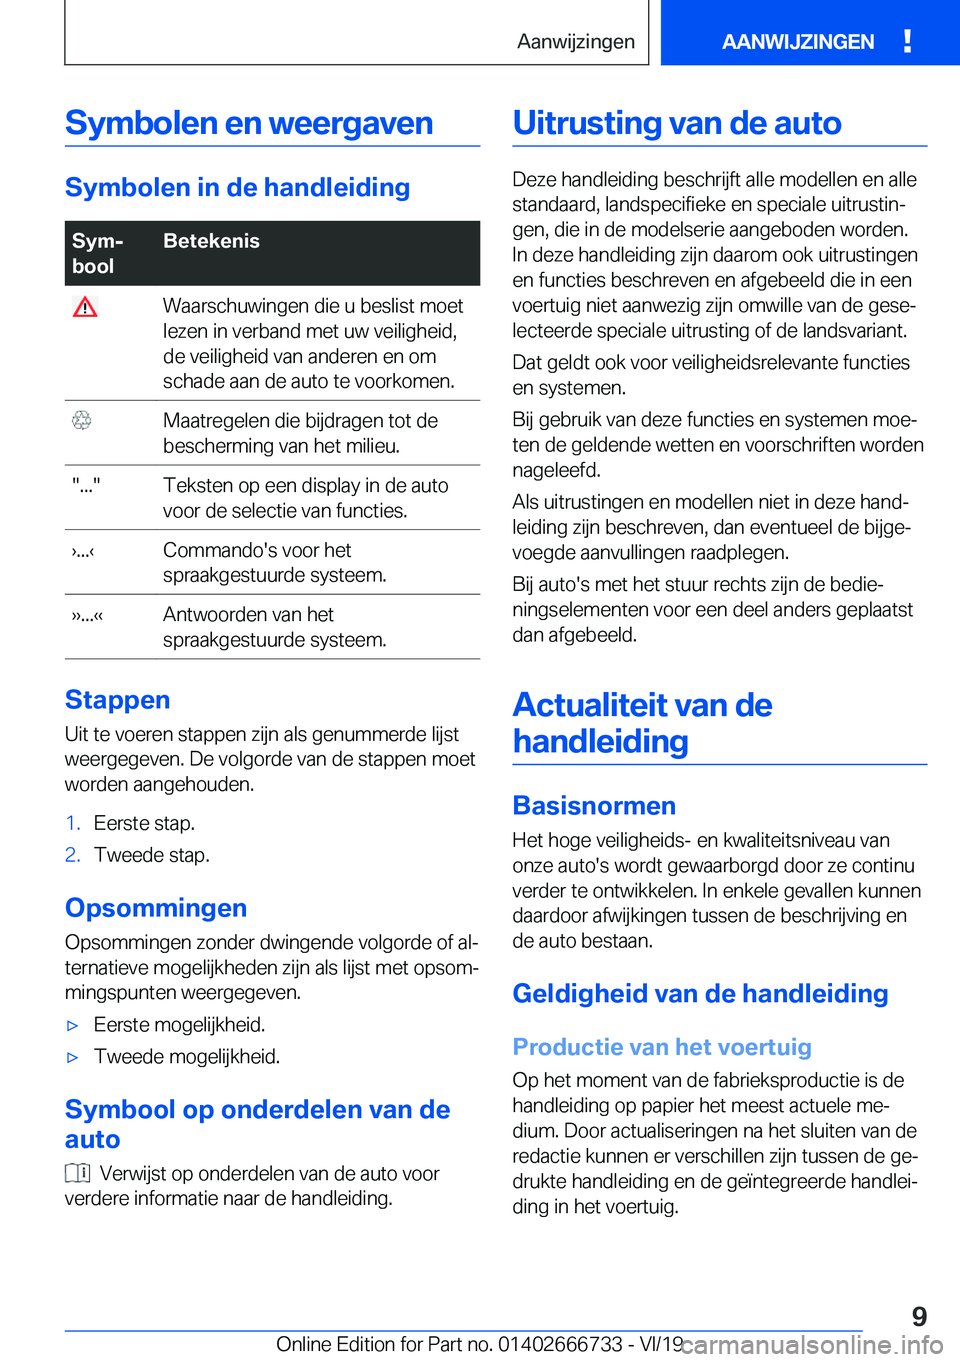 BMW M5 2020  Instructieboekjes (in Dutch) �S�y�m�b�o�l�e�n��e�n��w�e�e�r�g�a�v�e�n
�S�y�m�b�o�l�e�n��i�n��d�e��h�a�n�d�l�e�i�d�i�n�g
�S�y�mj
�b�o�o�l�B�e�t�e�k�e�n�i�s��W�a�a�r�s�c�h�u�w�i�n�g�e�n��d�i�e��u��b�e�s�l�i�s�t��m�o�e�t
